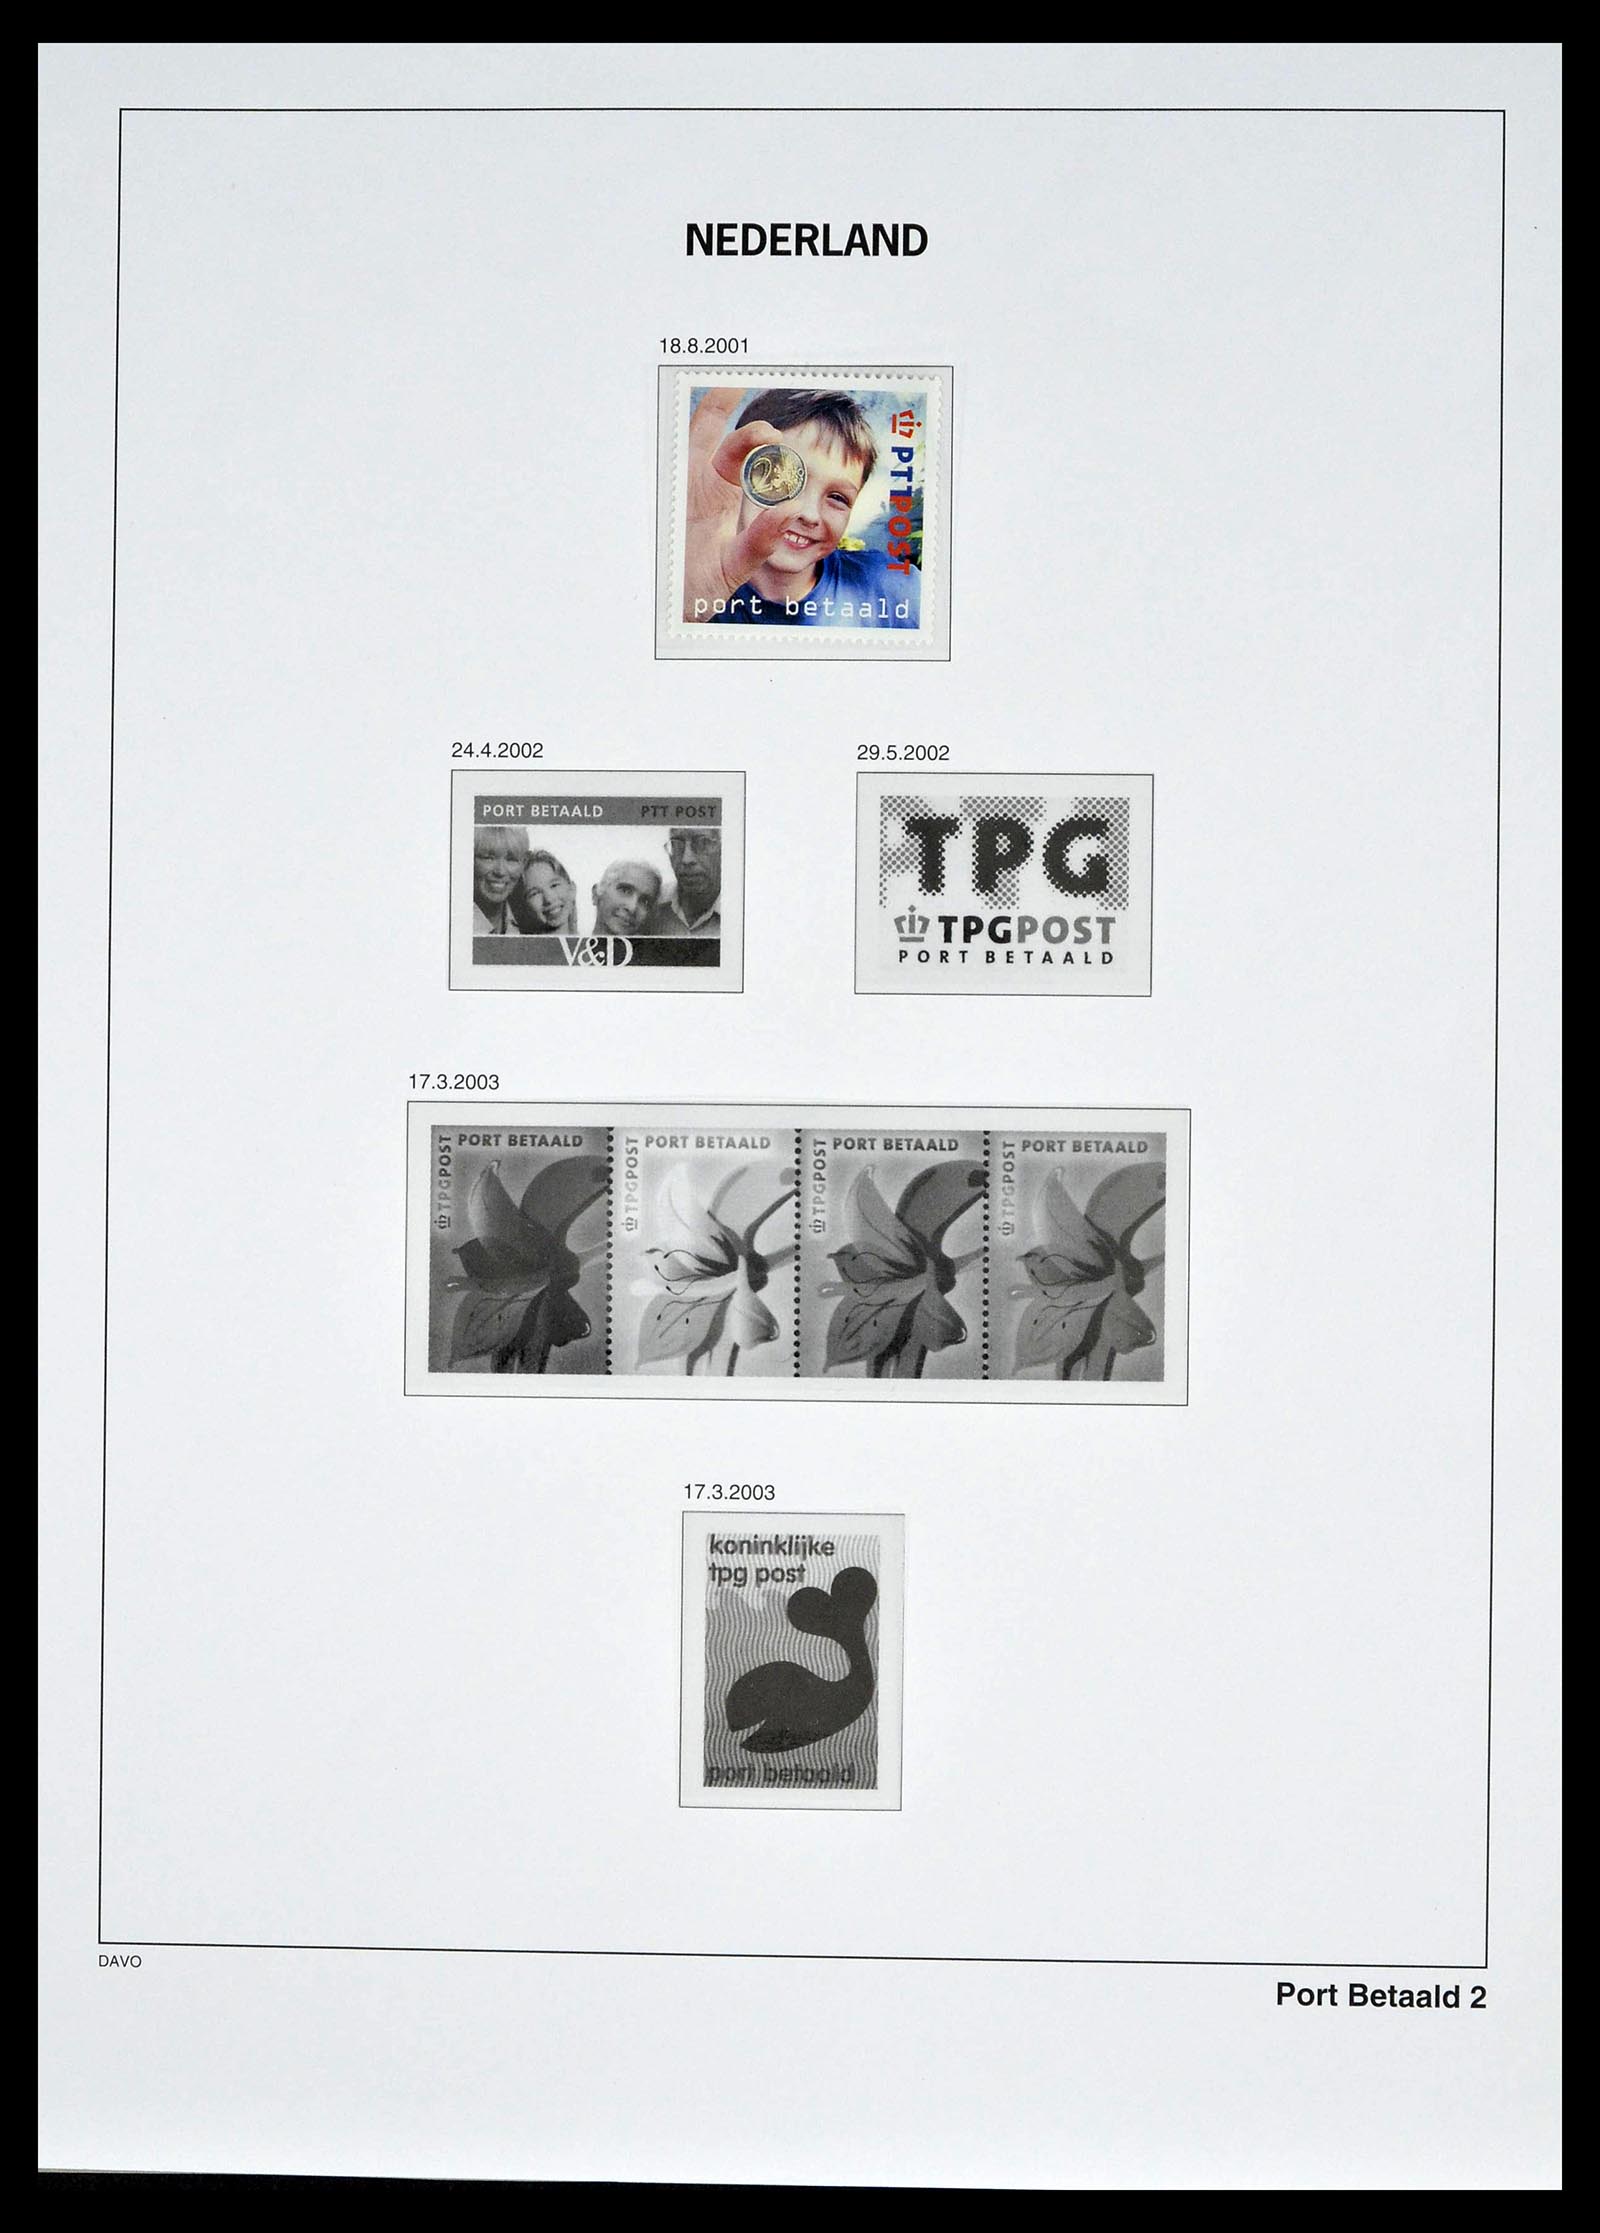 39362 0052 - Stamp collection 39362 Netherlands stamp booklets 1964-2003.